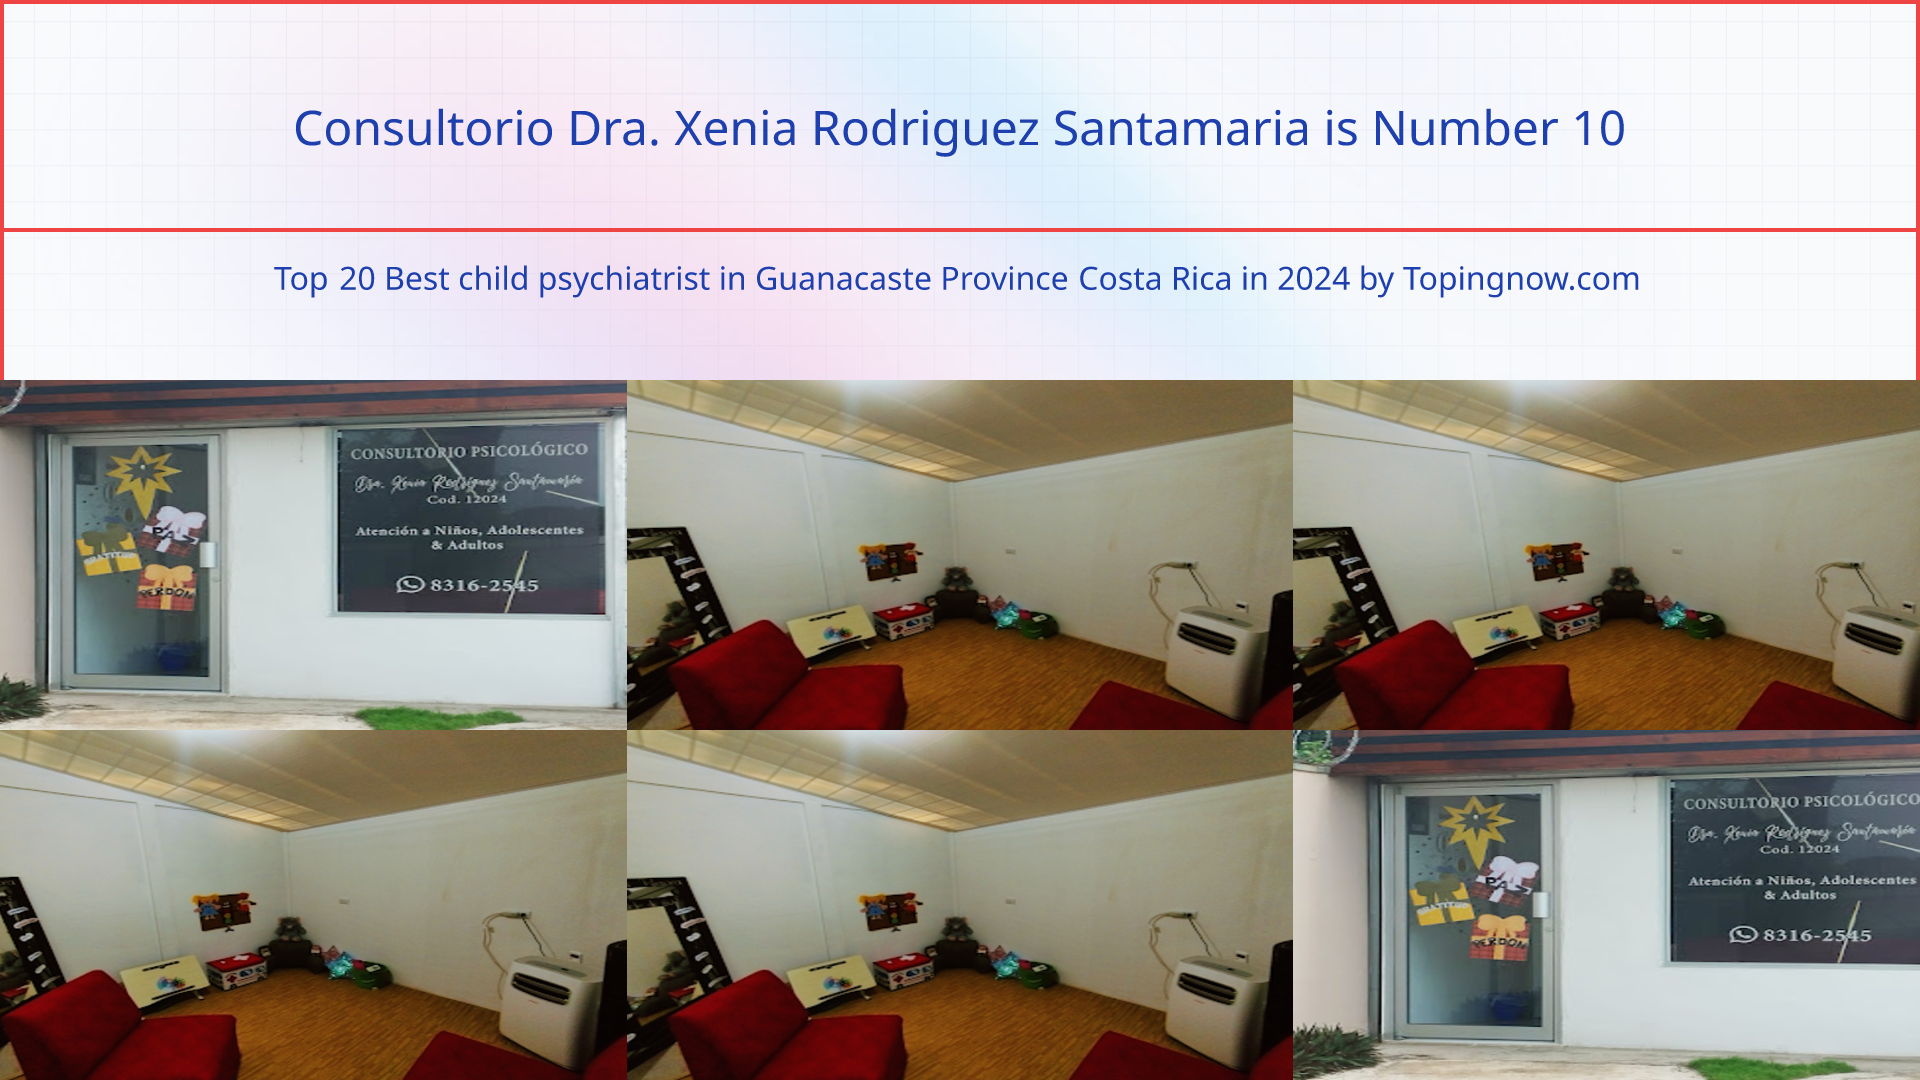 Consultorio Dra. Xenia Rodriguez Santamaria: Top 20 Best child psychiatrist in Guanacaste Province Costa Rica in 2024